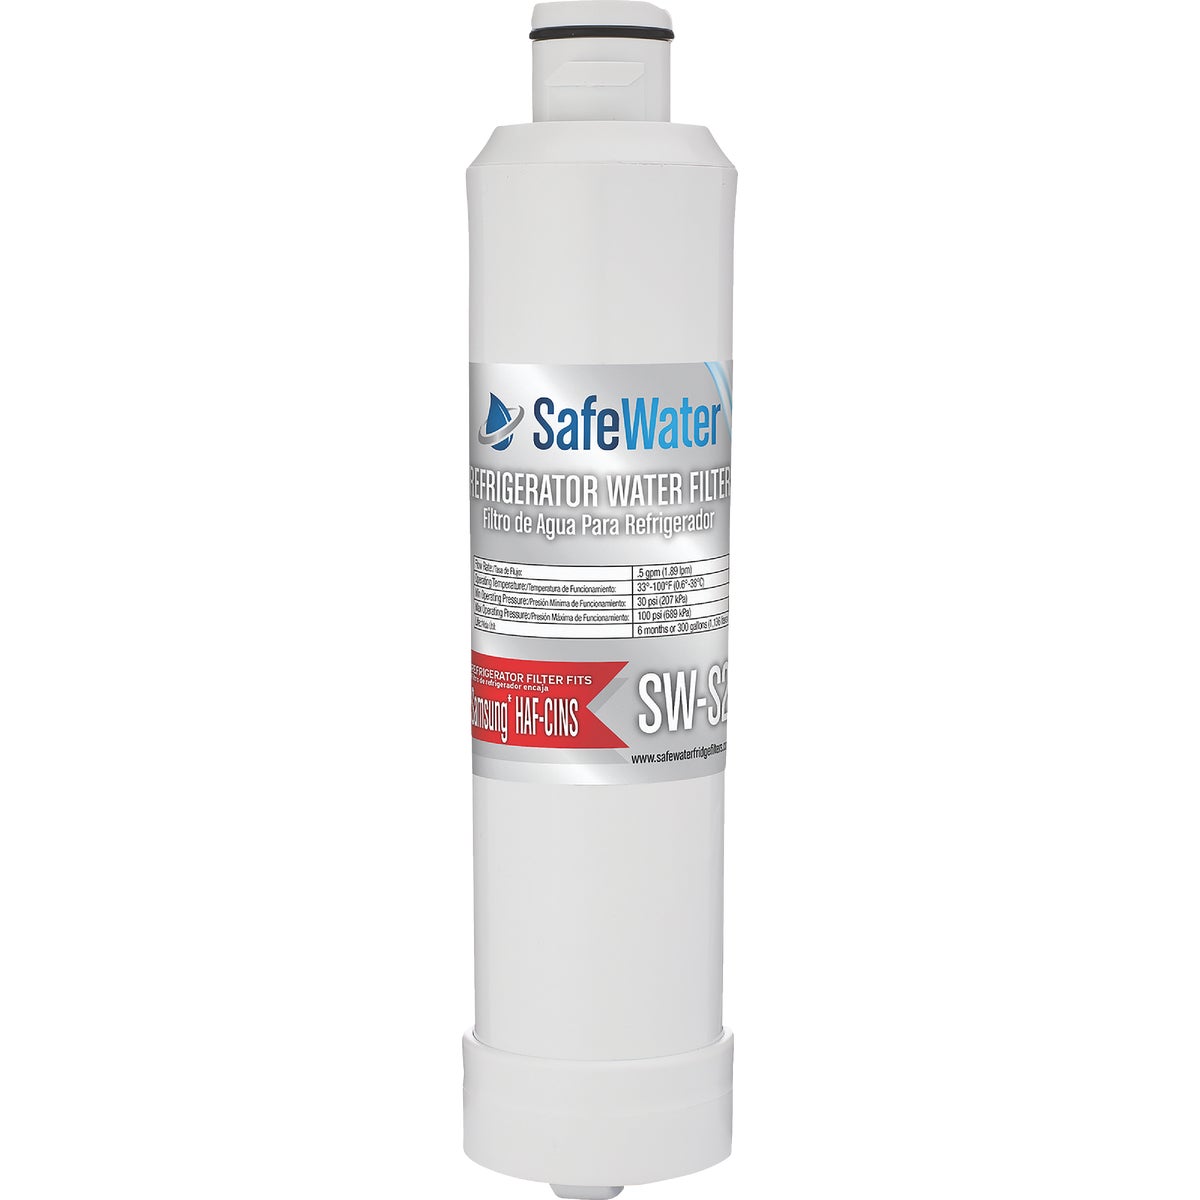 EarthSmart S2 Samsung Icemaker & Refrigerator Water Filter Cartridge